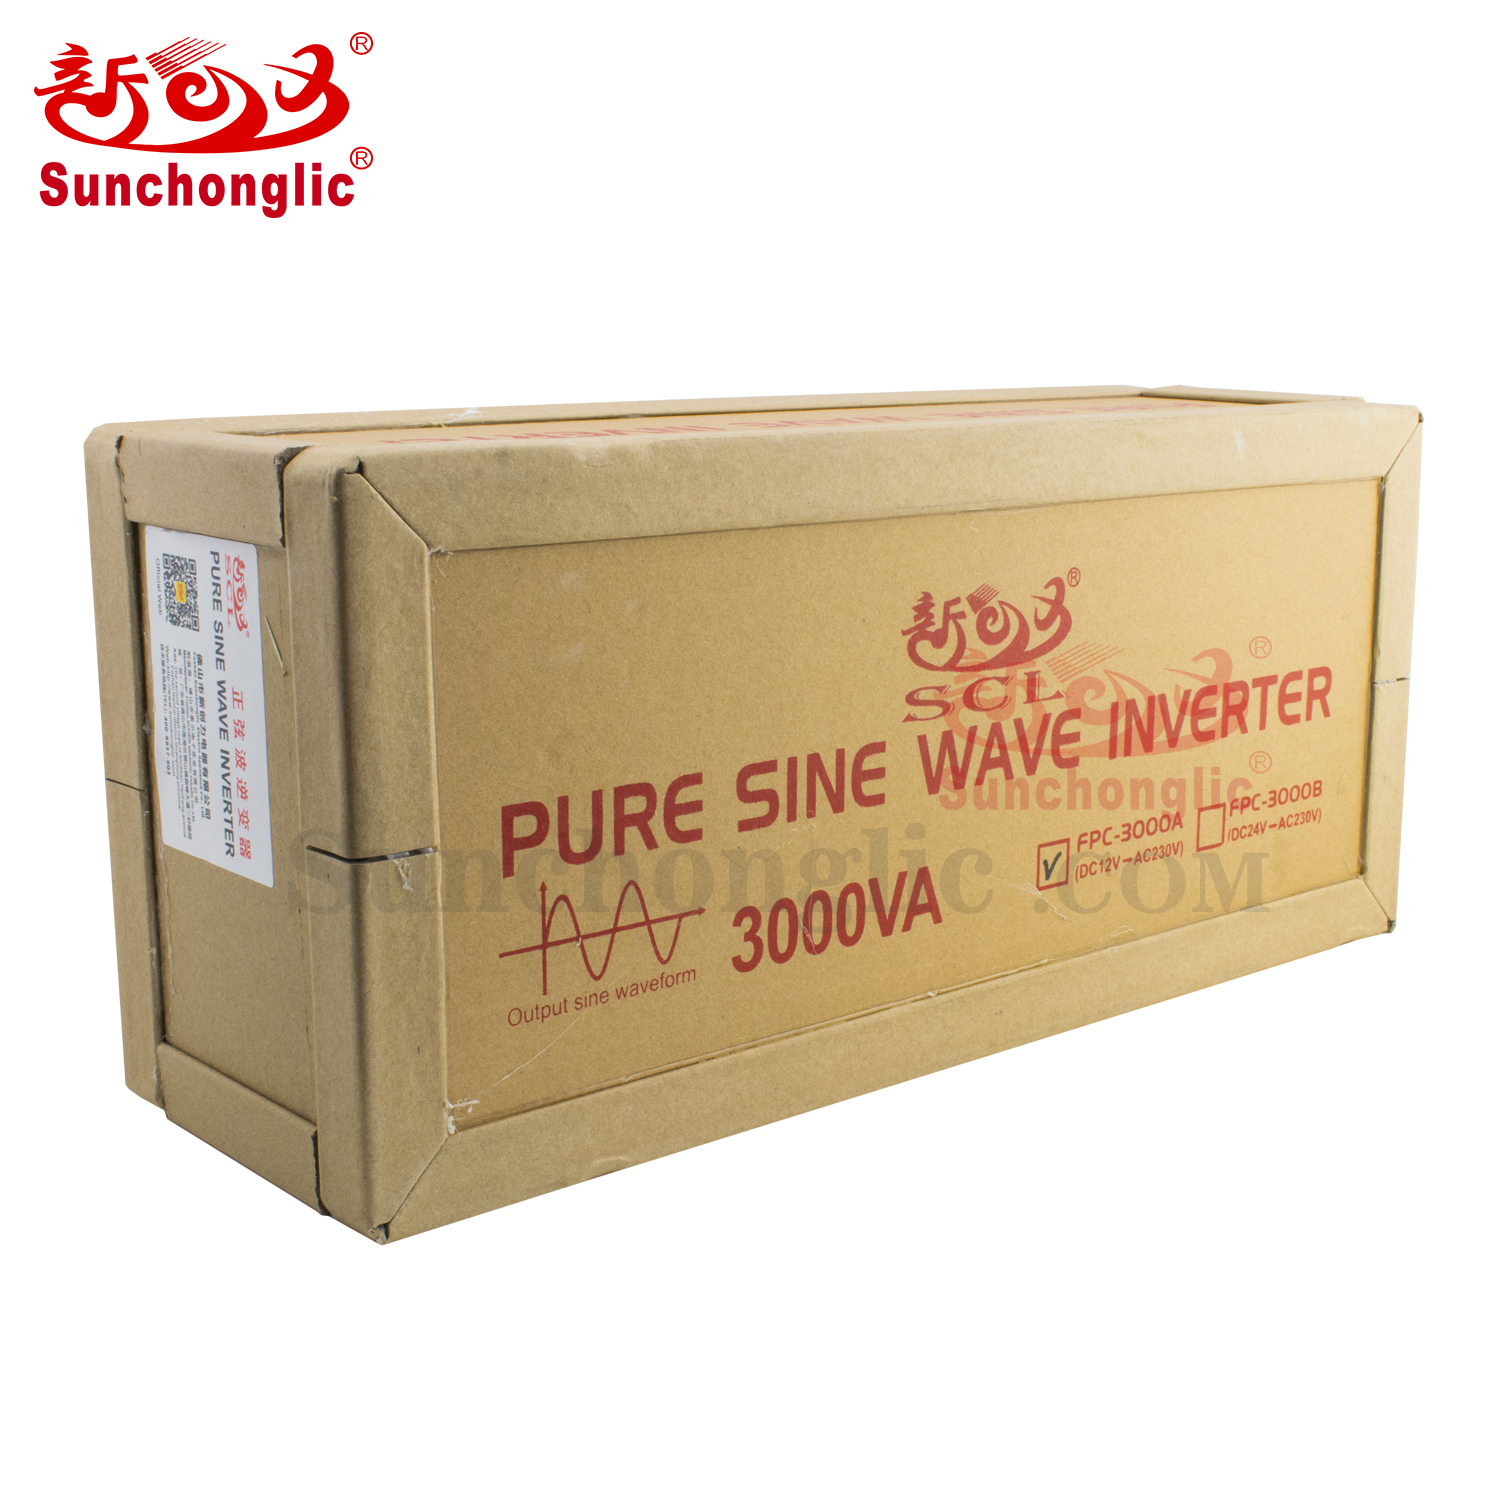 Modified Sine Wave Inverter - FPC-3000A